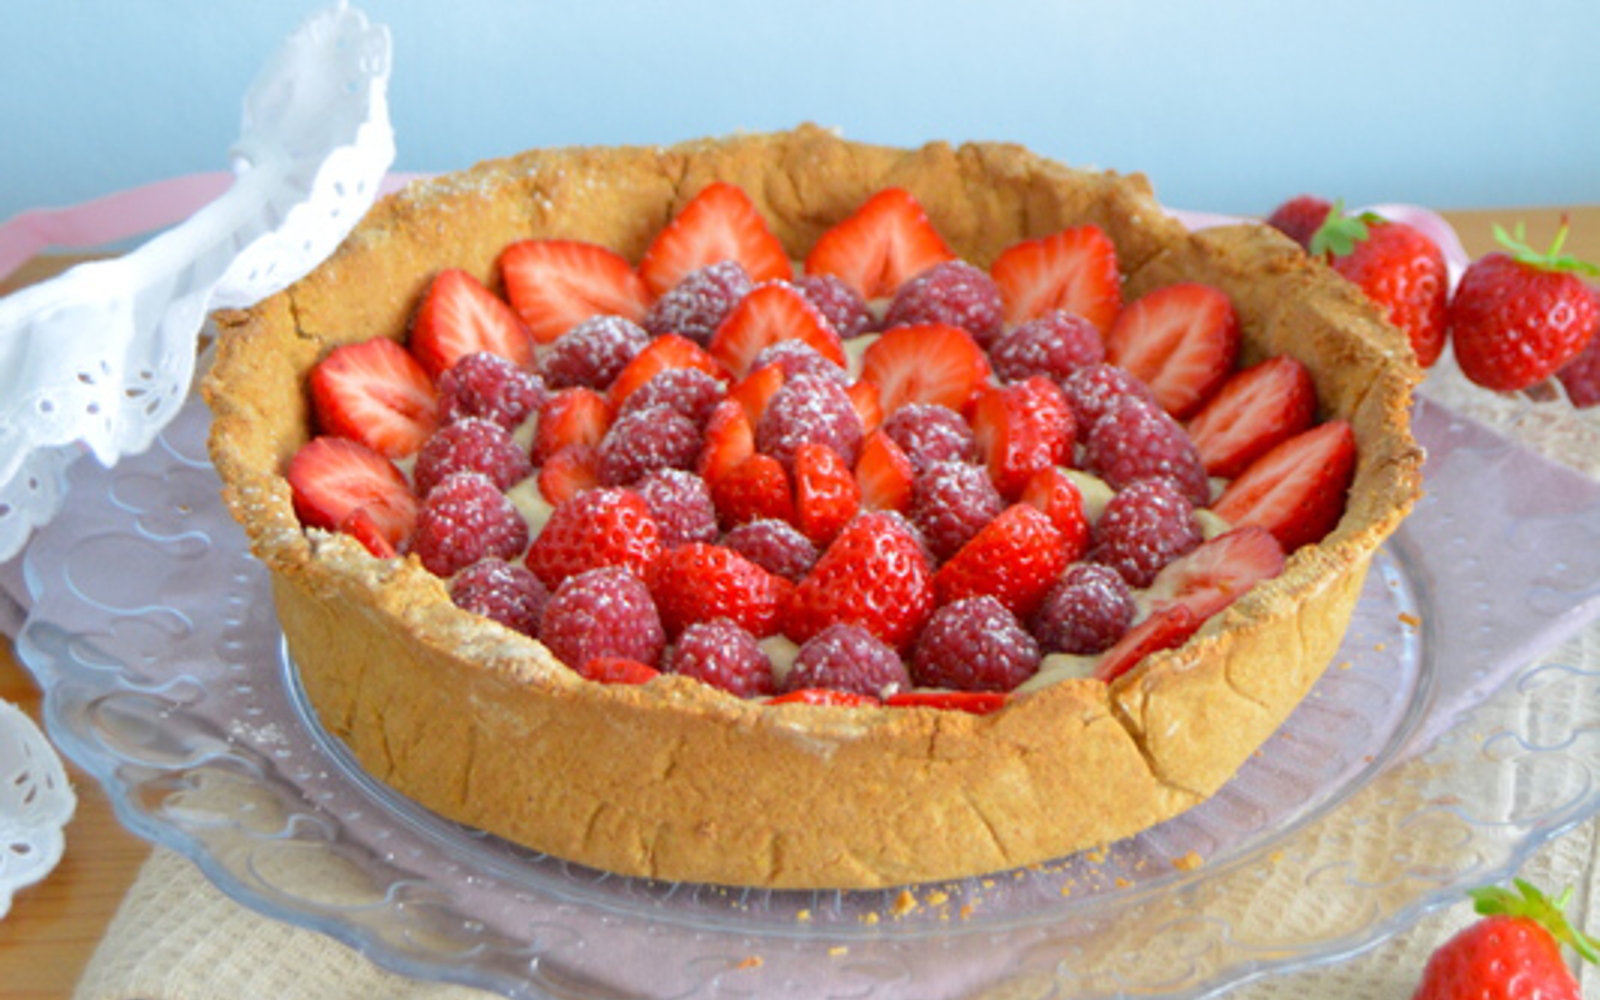 Vegan strawberry and raspberry tart with polenta crust